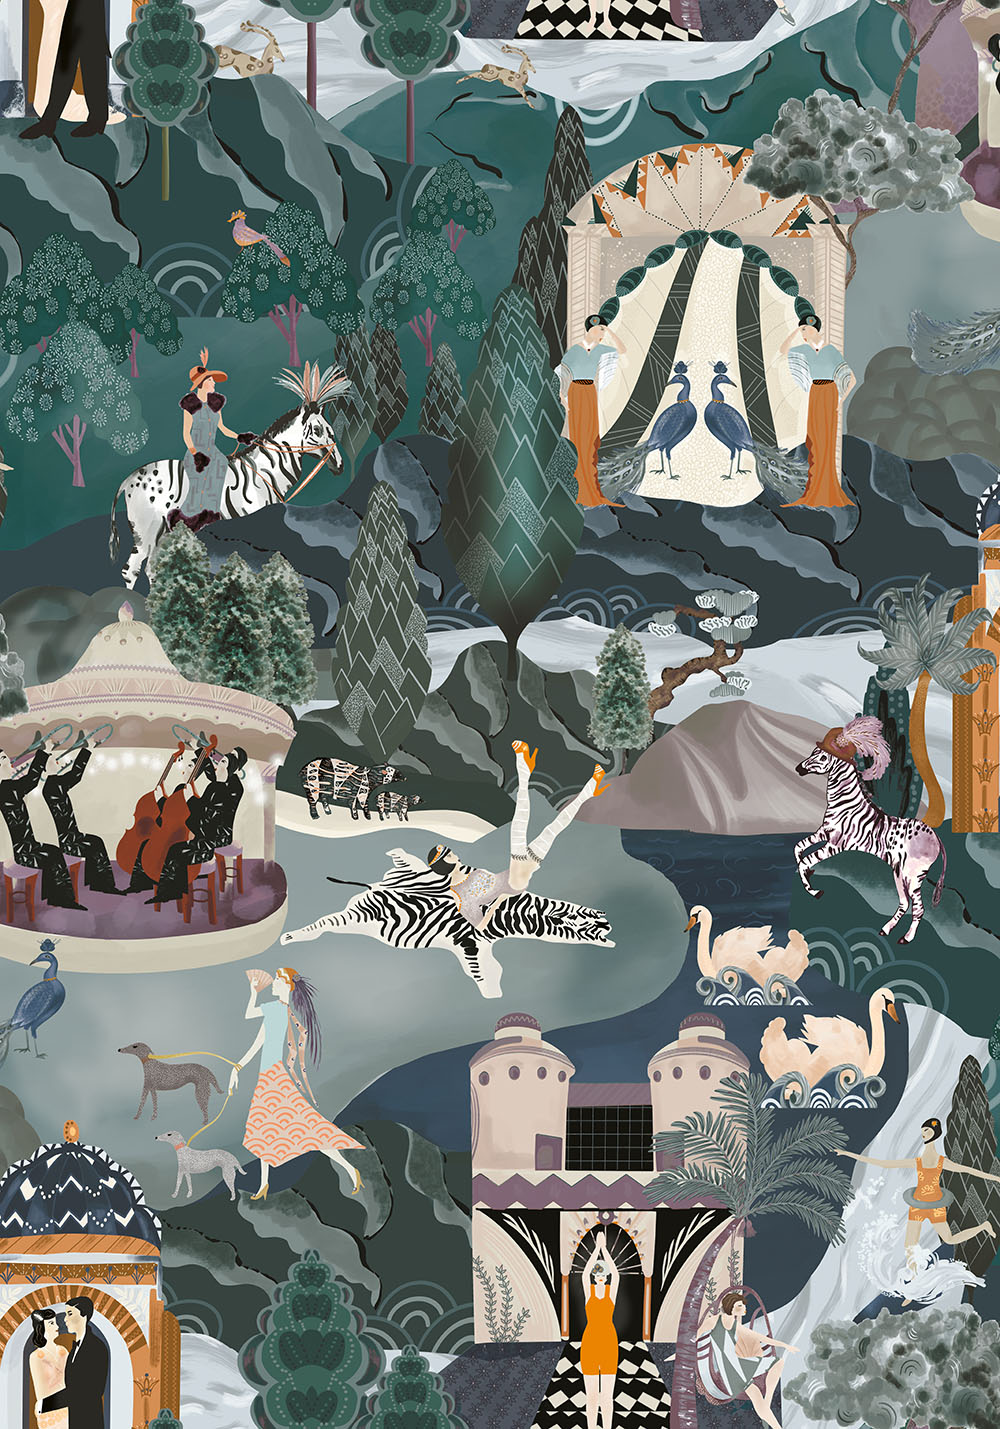 brand-mckenzie-wallpaper-heart-deco-collection-art-decodance-bold-comic-wallpaper-print-animals-swans-architecture-buildings-trees-zebras-fashional-women